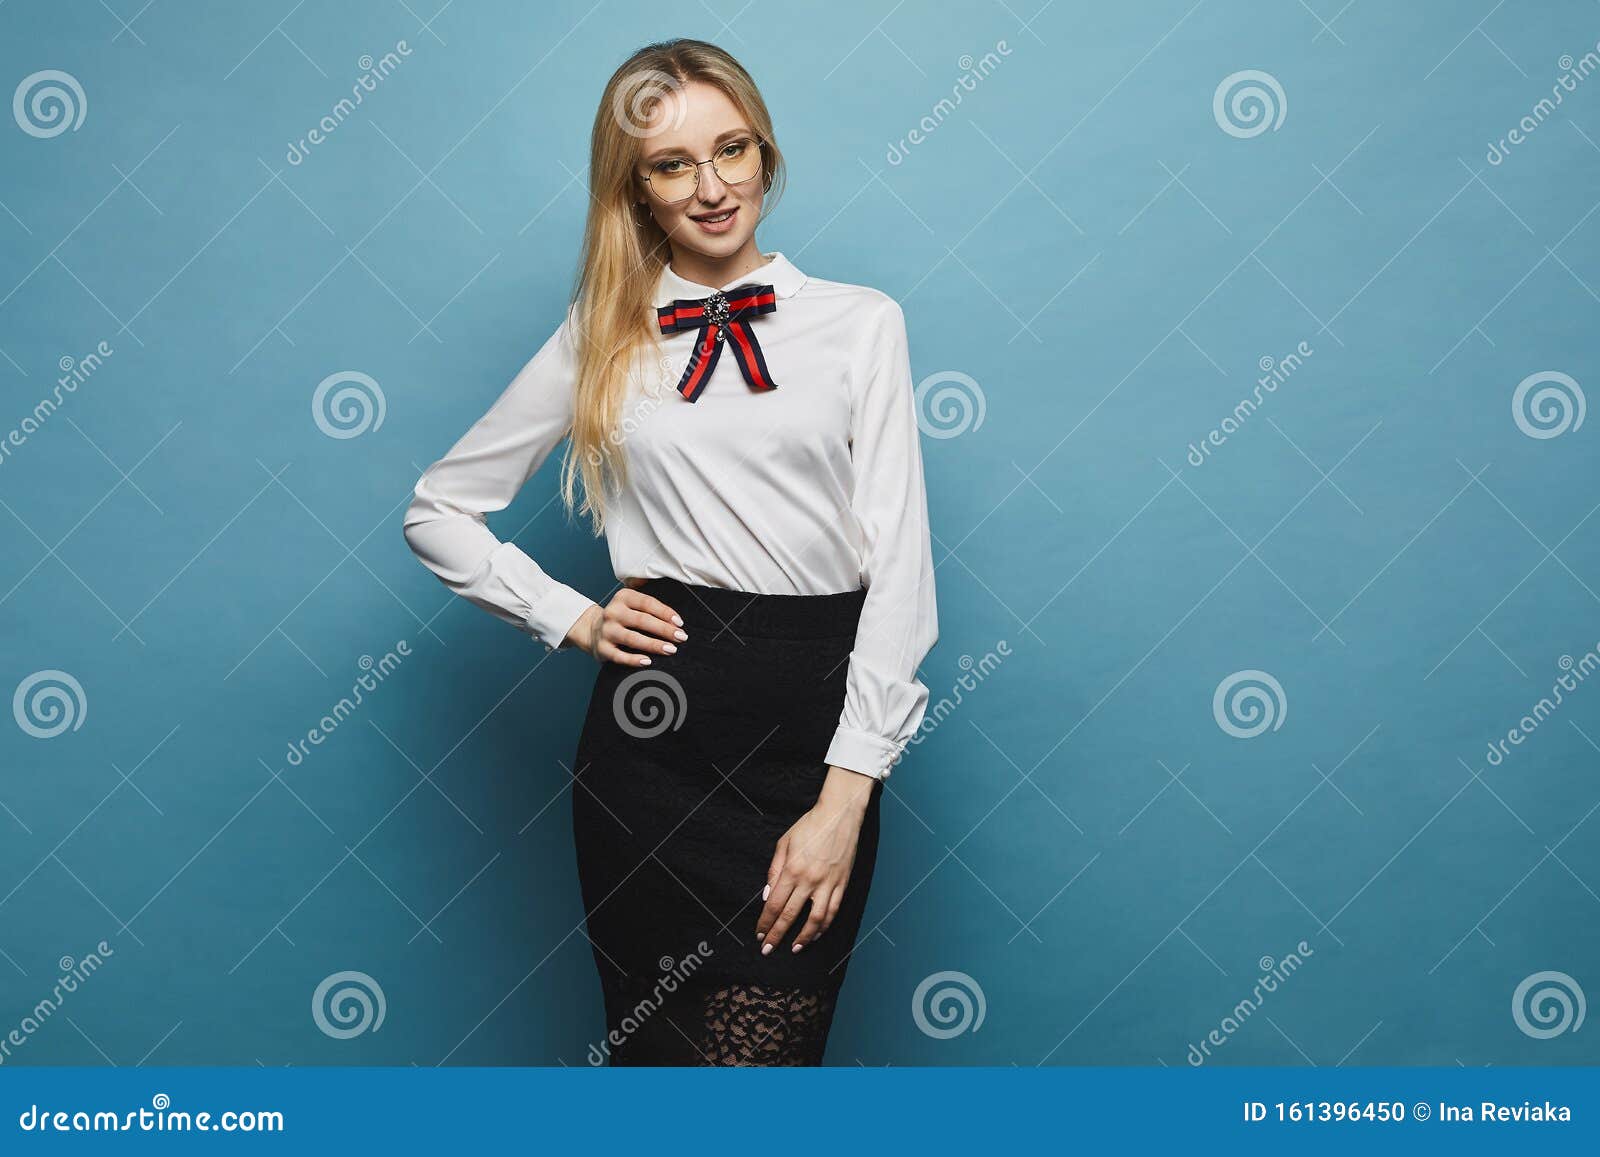 hausa style for ankara skirt and blouse｜TikTok Search